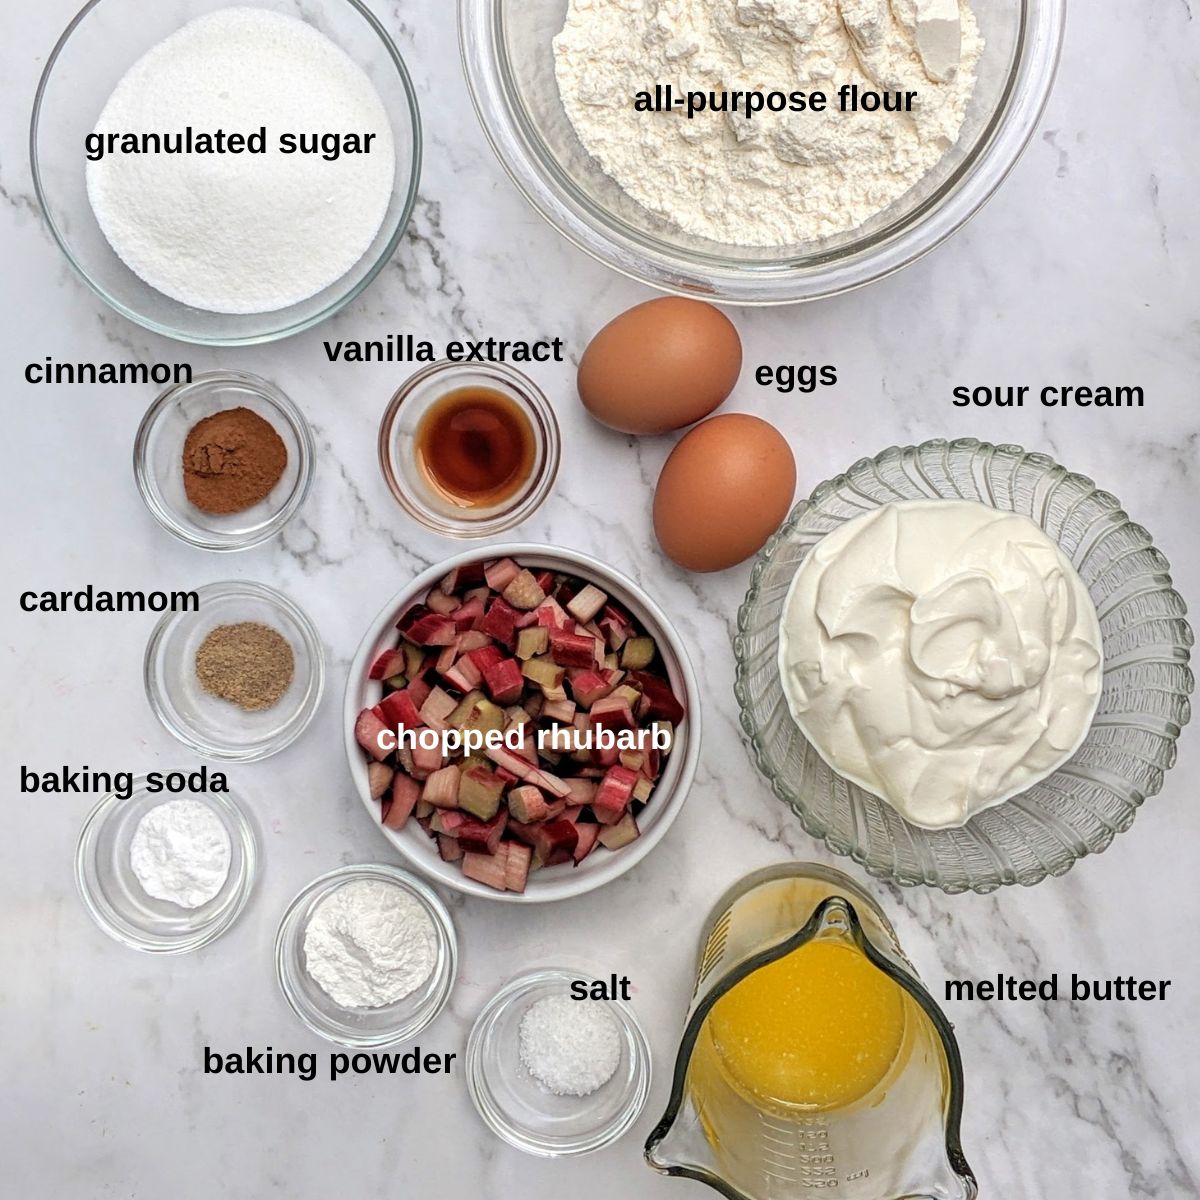 Ingredients to make rhubarb muffins.